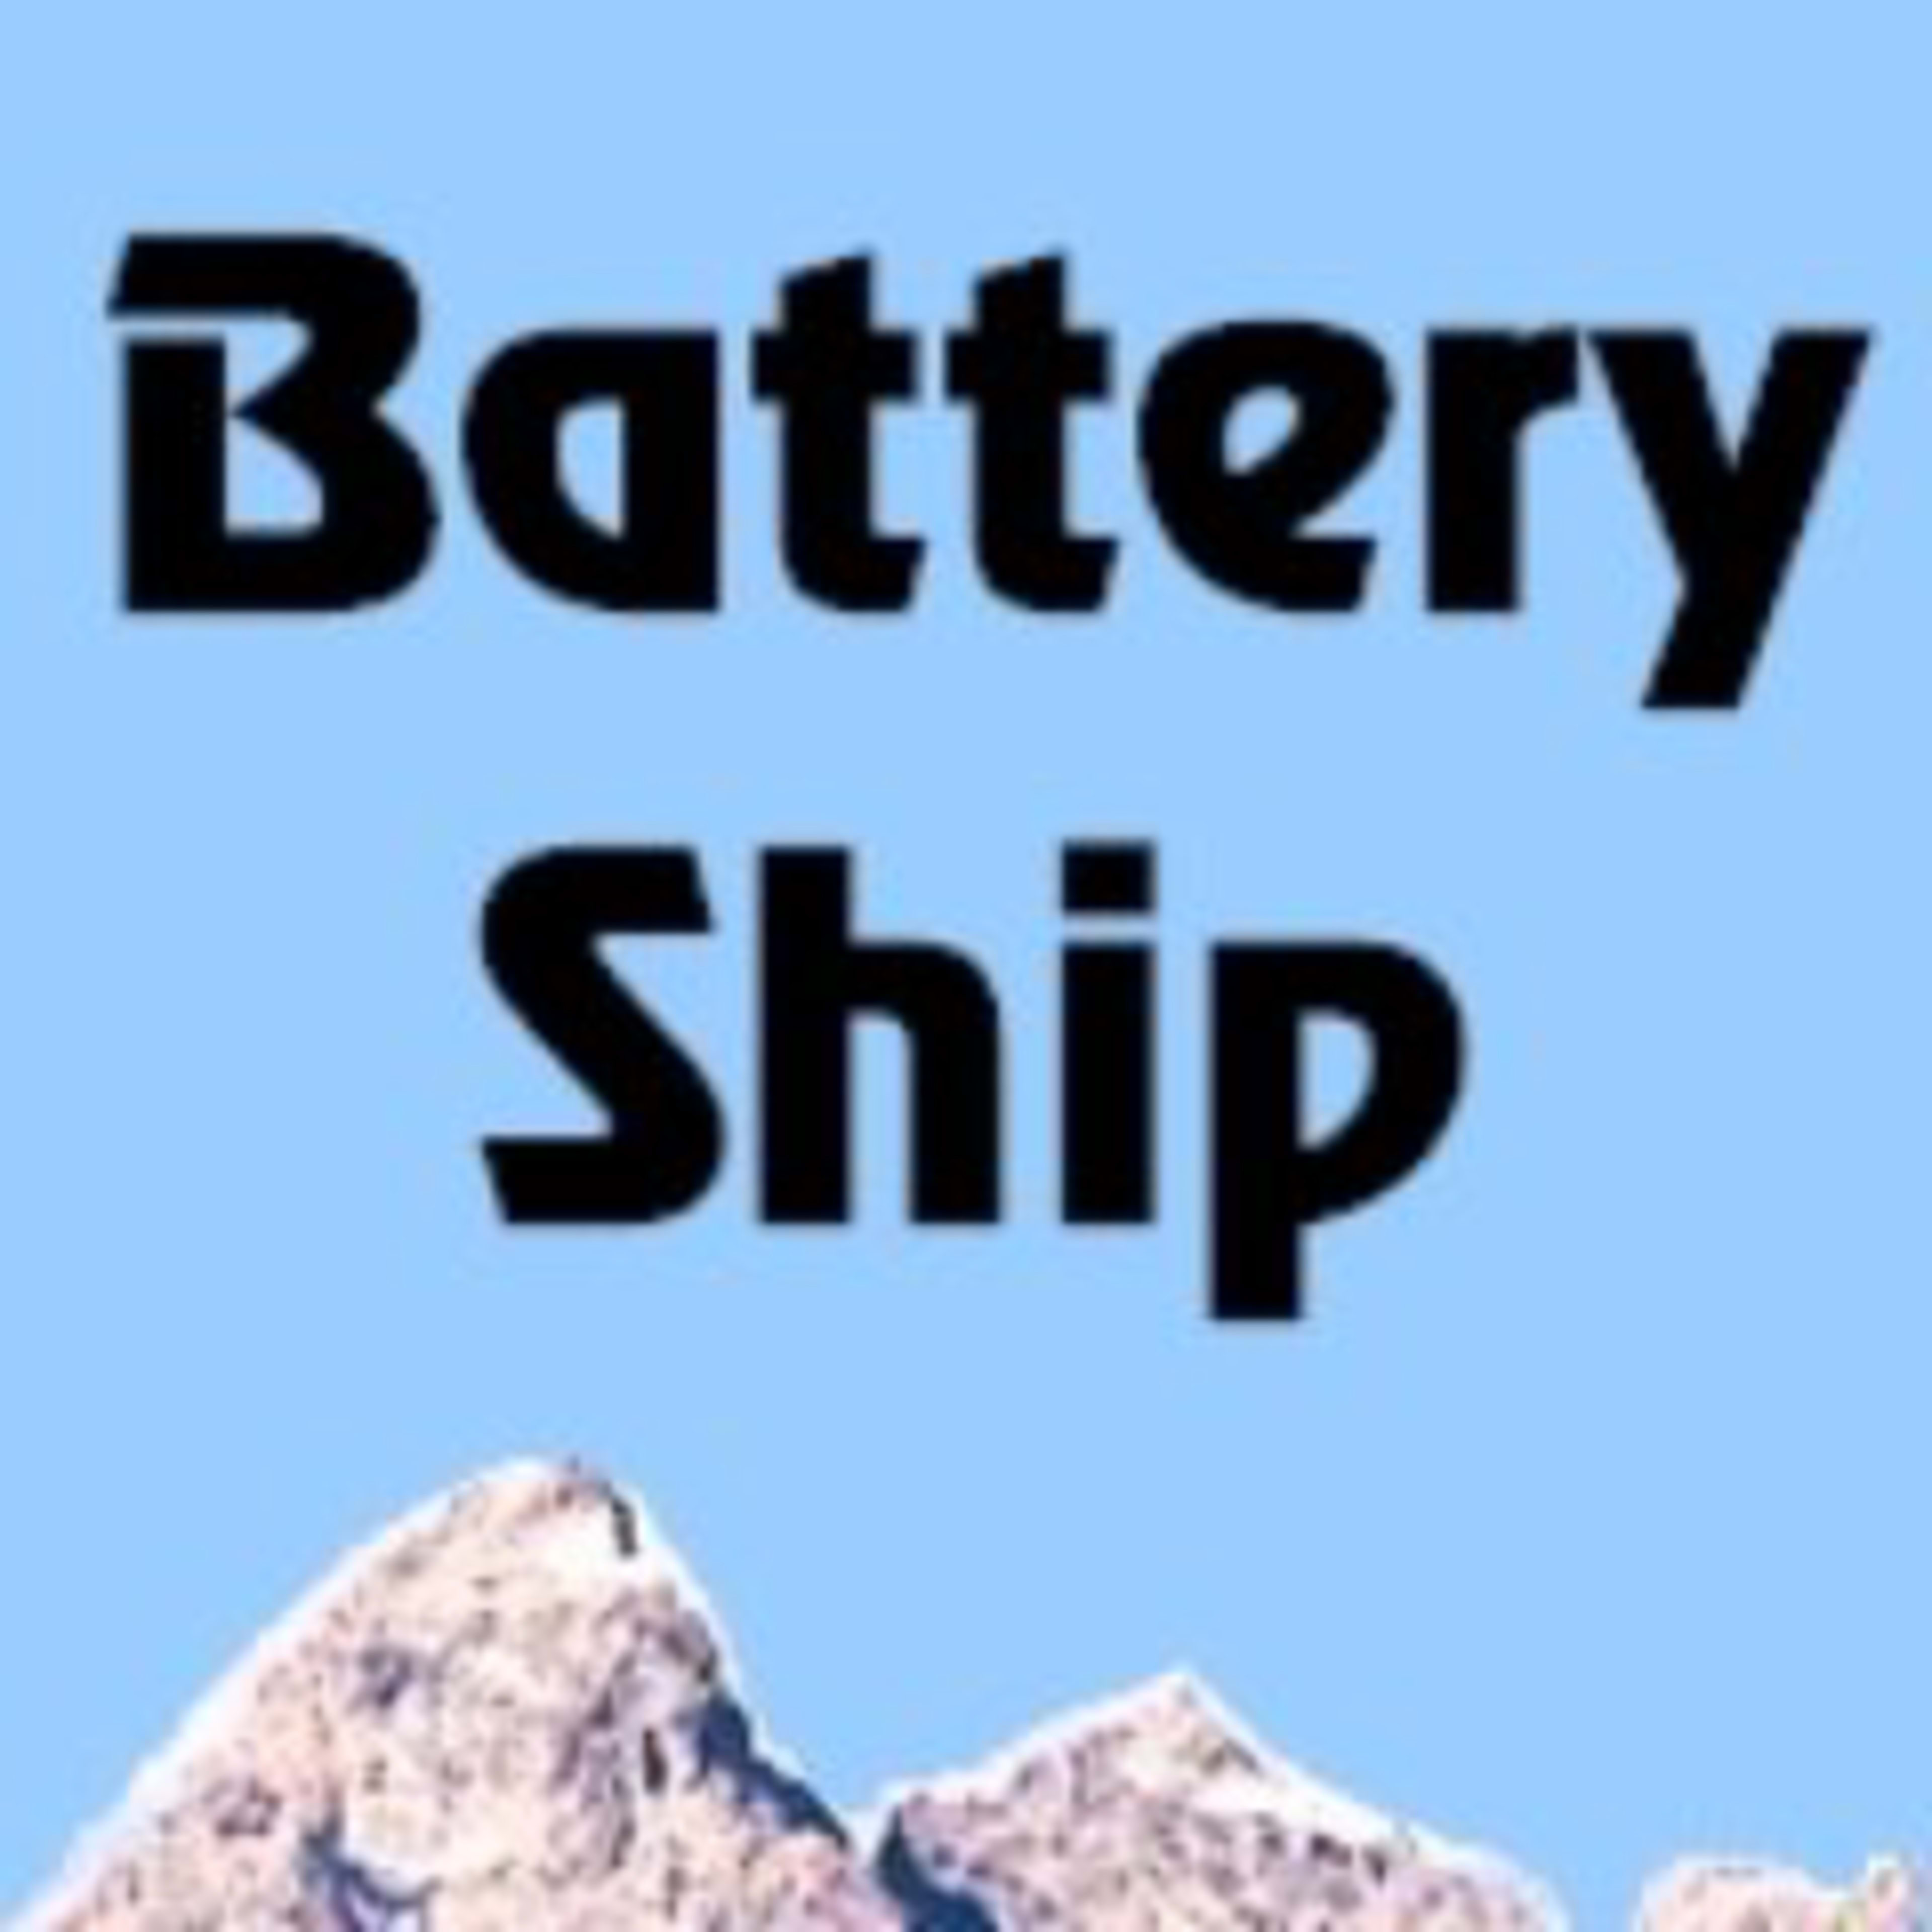 BatteryShipCode